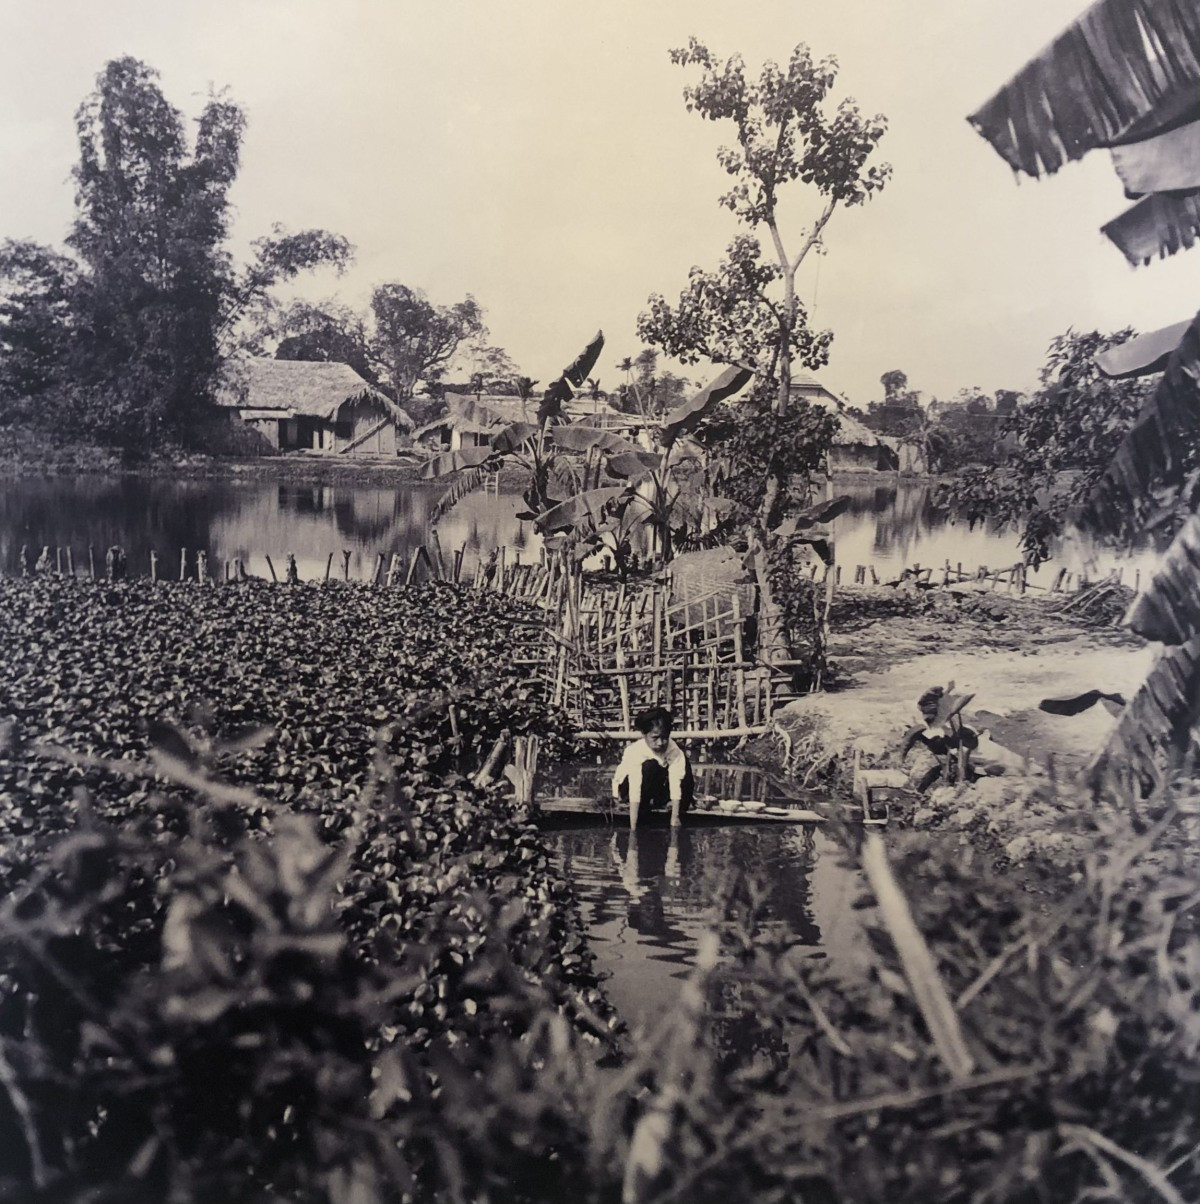 Mid-20th century Vietnam through Ukrainian photographer's lenses